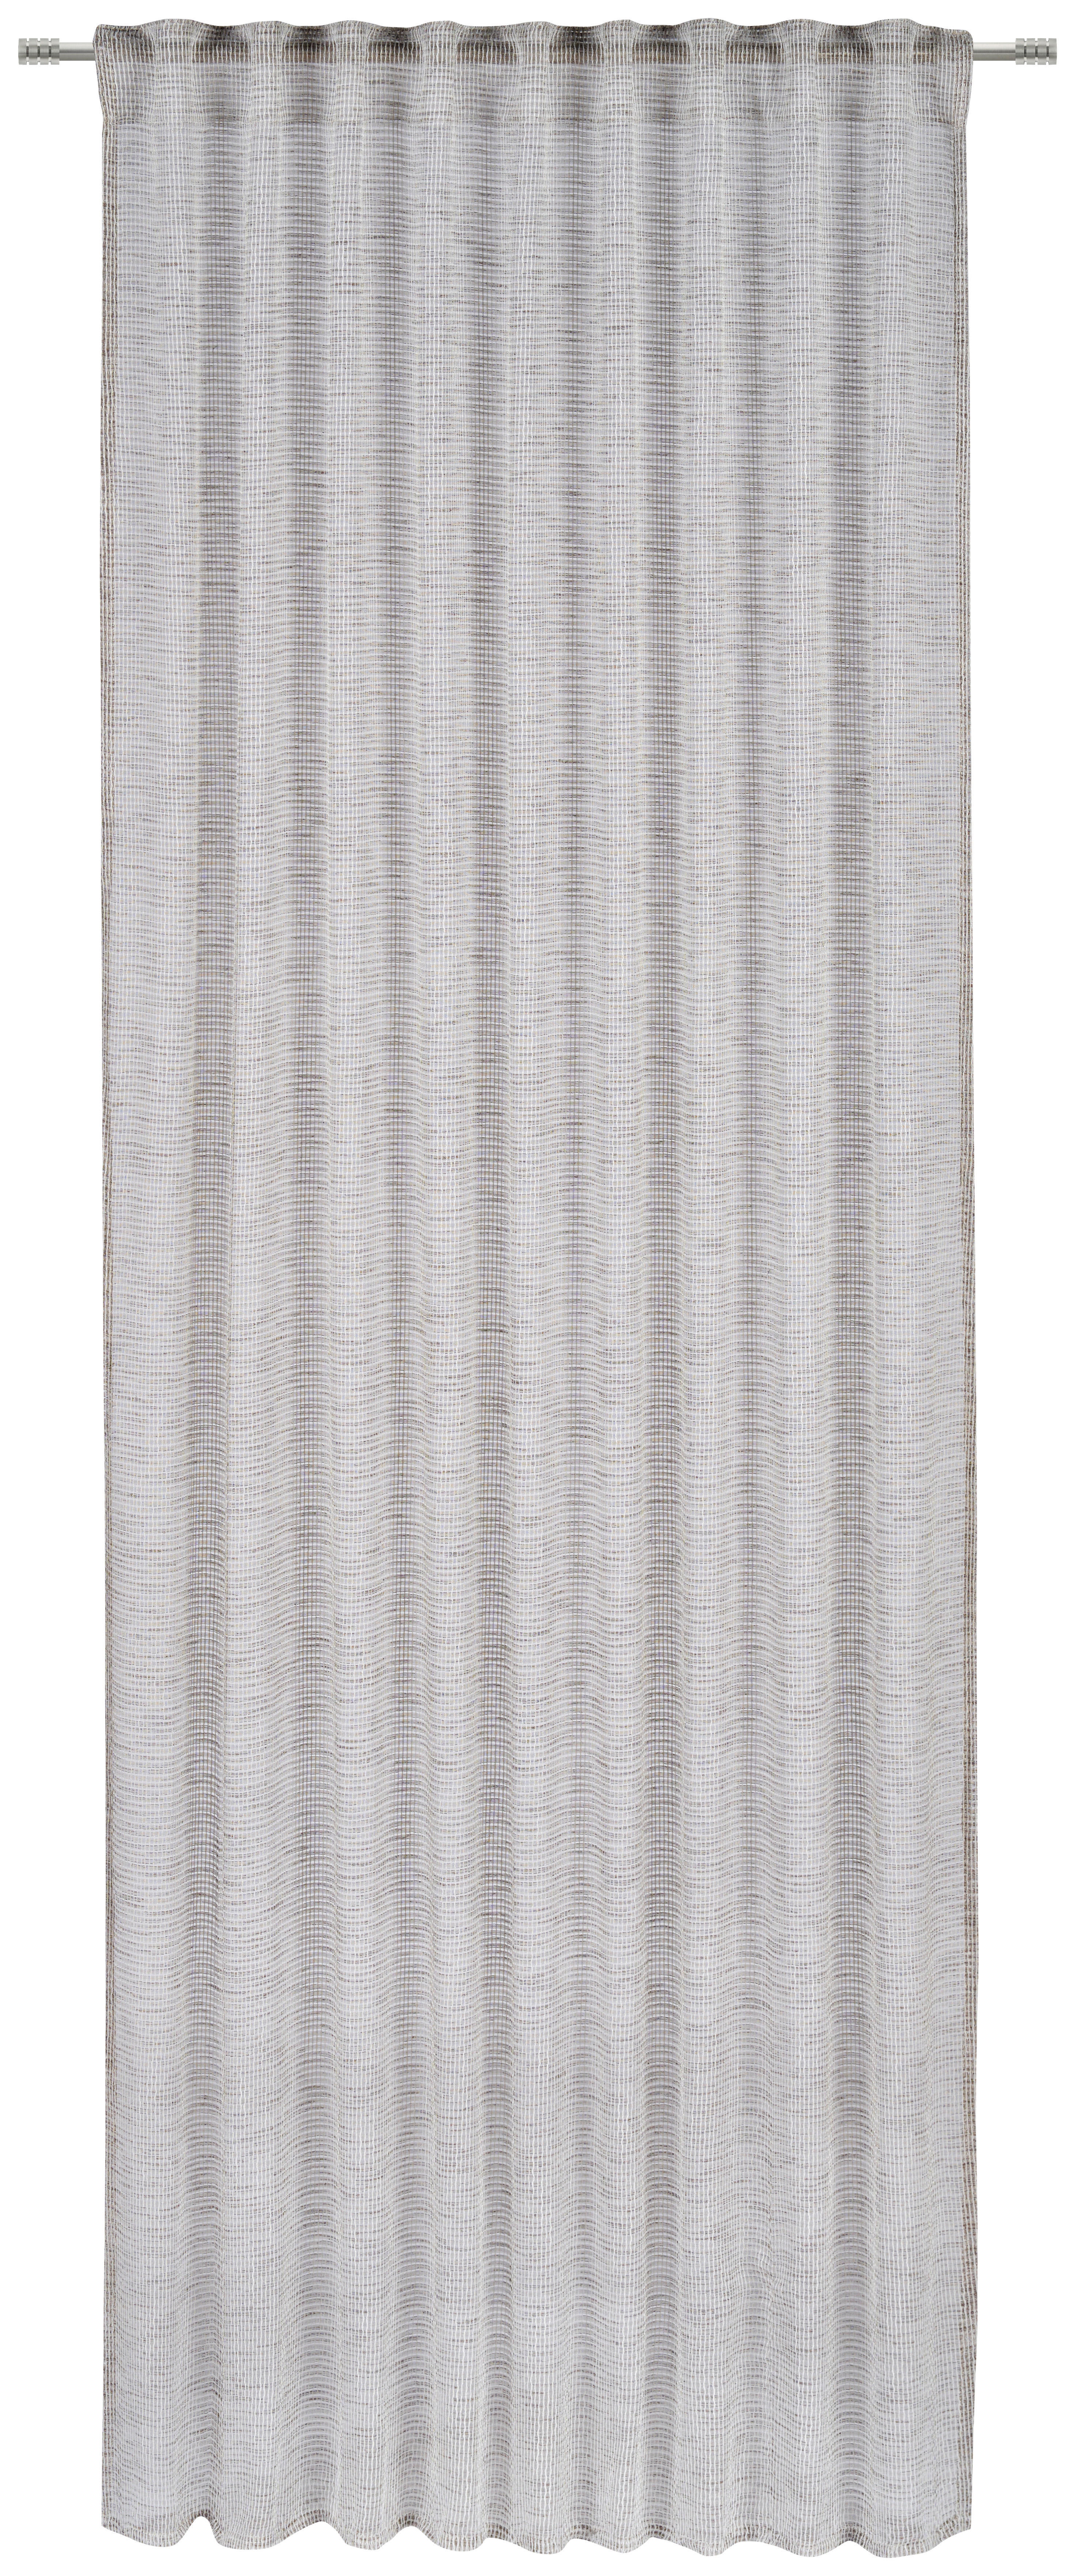 FERTIGVORHANG halbtransparent 135/245 cm   - Grau, Design, Textil (135/245cm) - Esposa